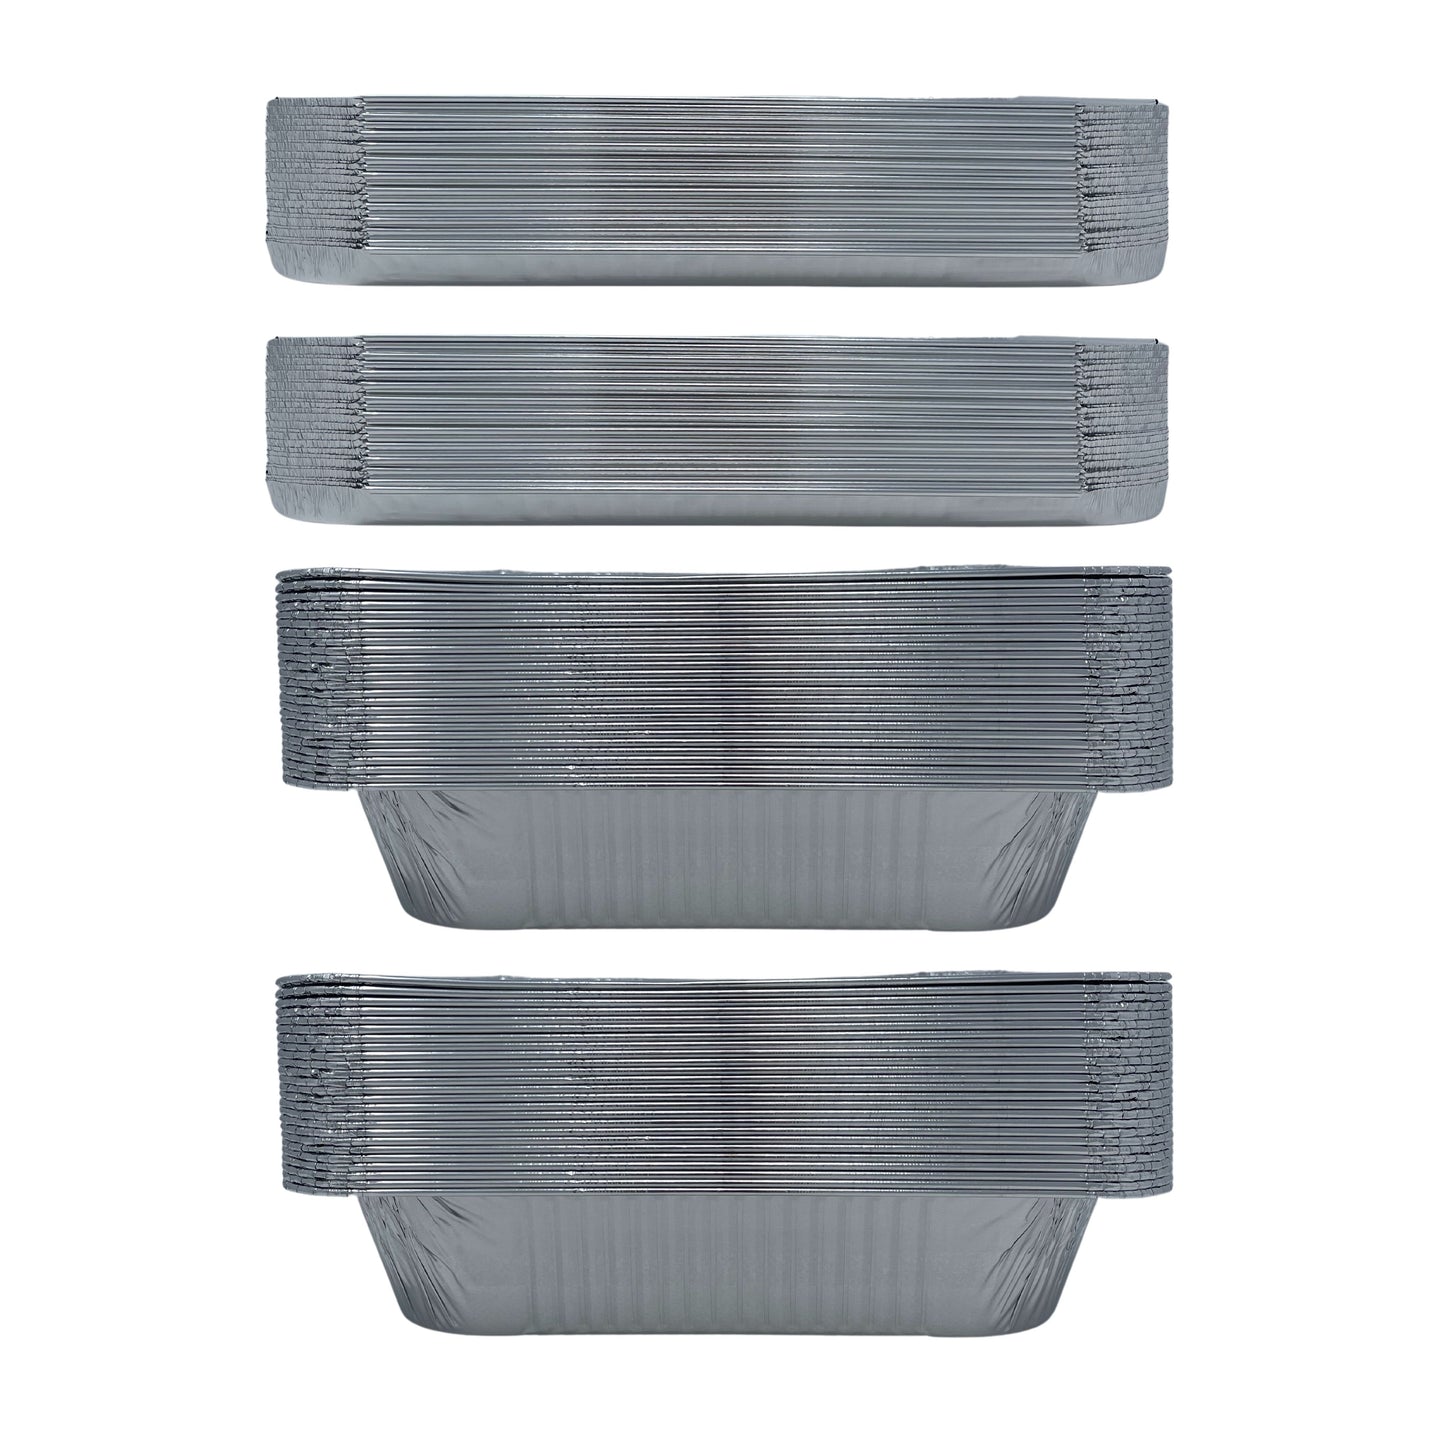 EJY IMPORT Half Size Aluminum Rectangular Pans